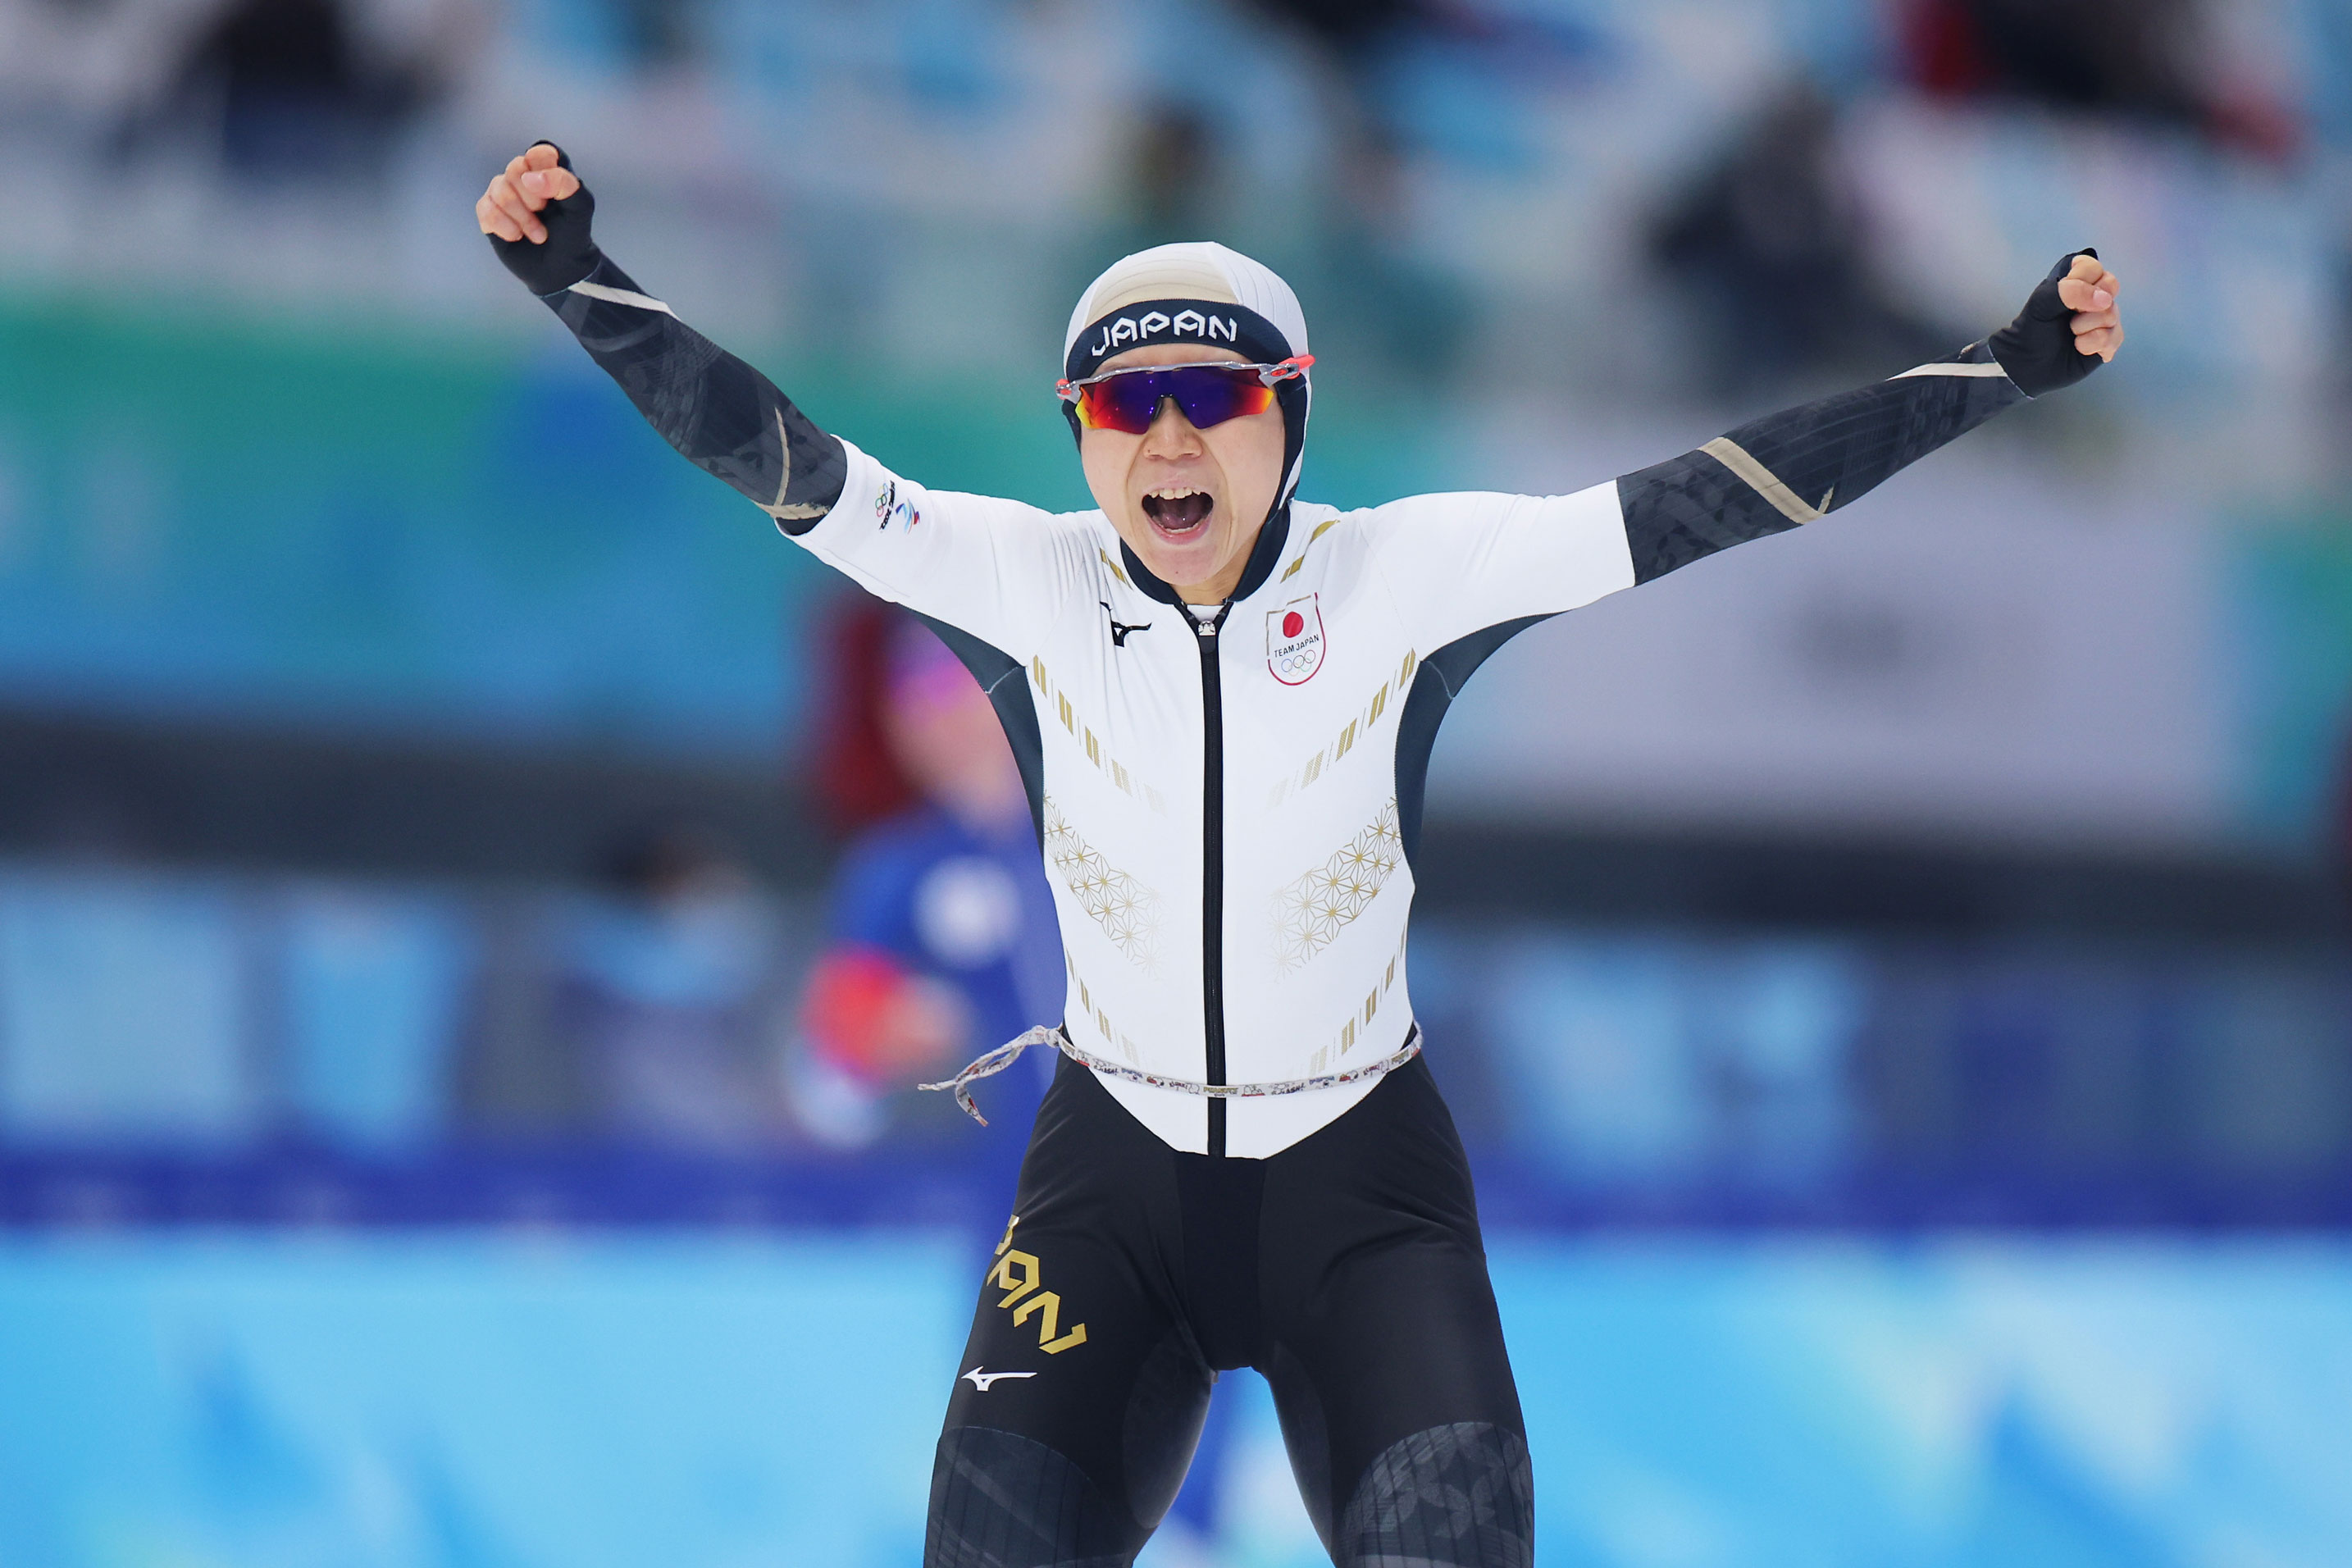 Miho Takagi of Japan celebrates after winning gold during the women's 1,000m on Thursday.